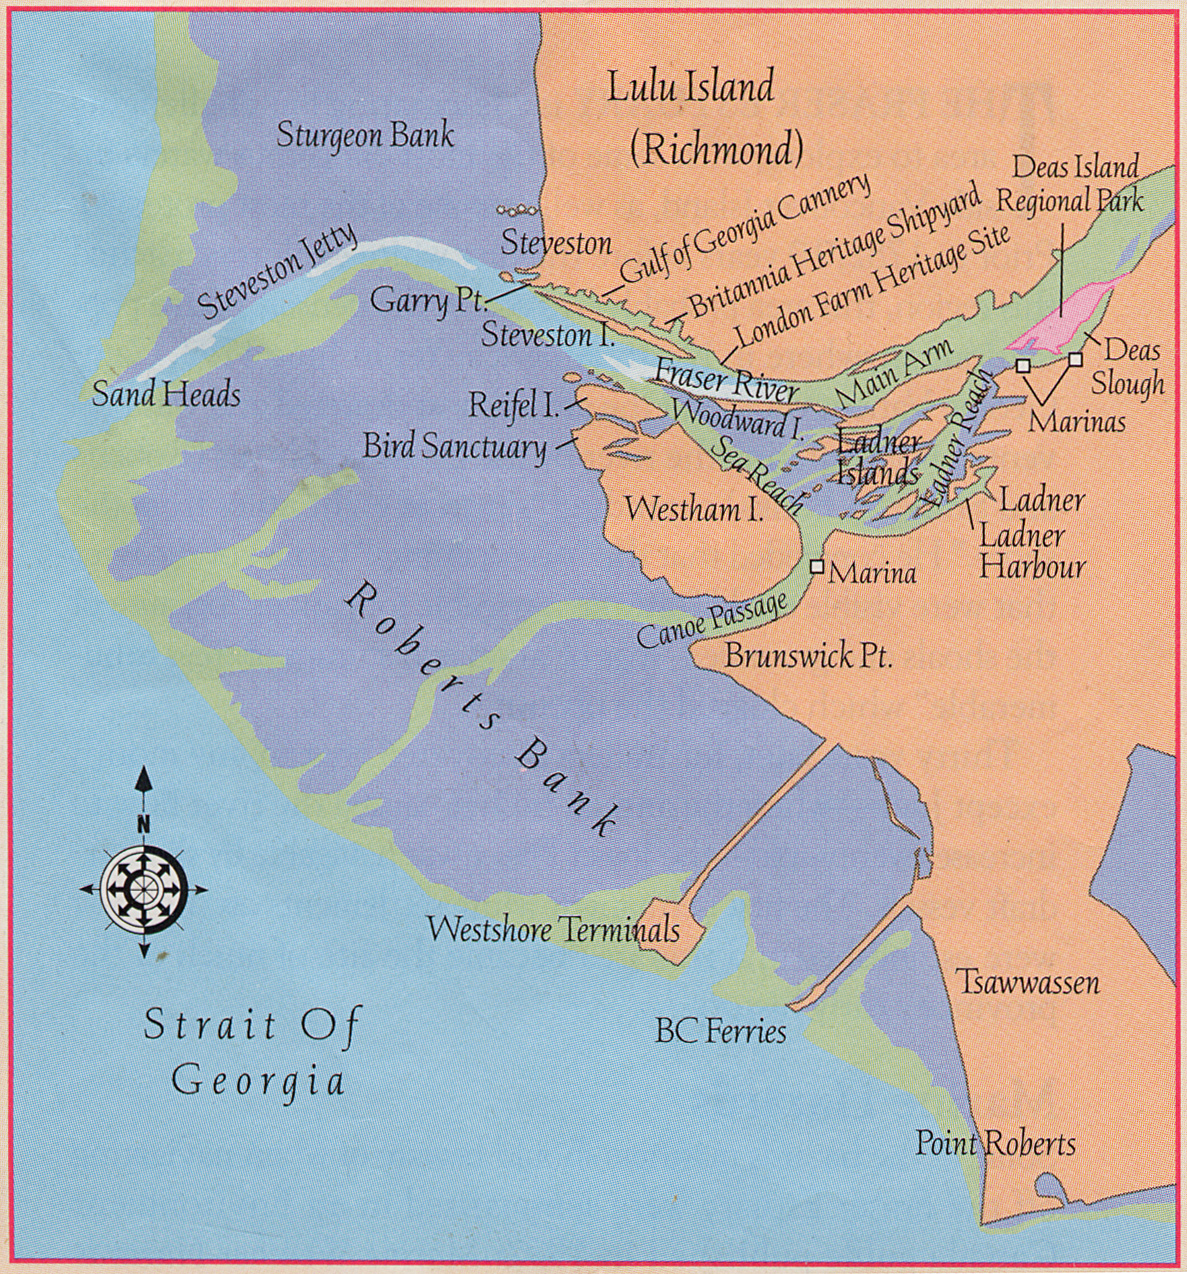 Strait of Georga